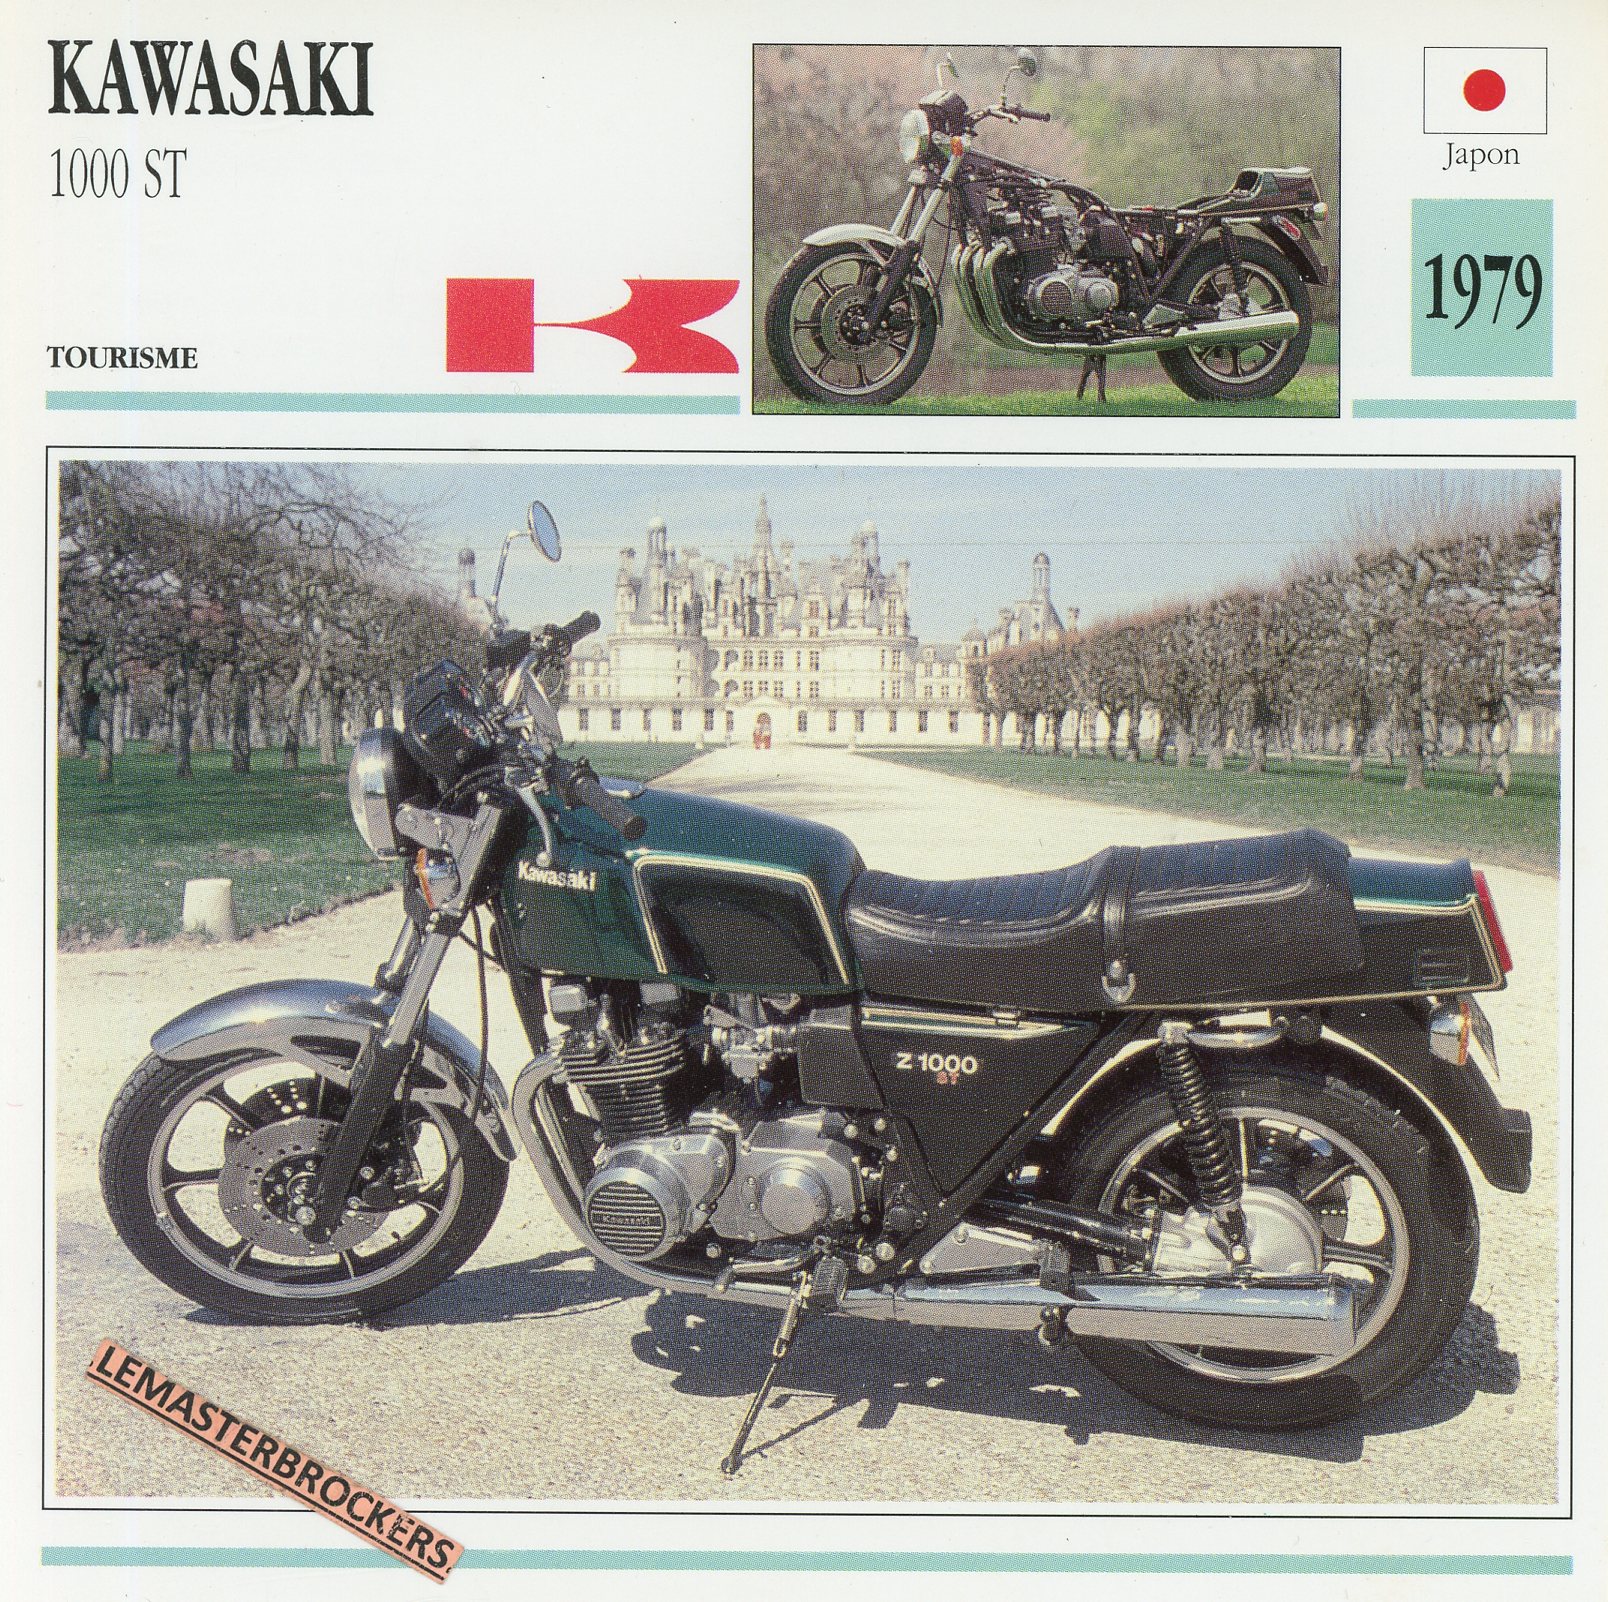 KAWASAKI-ST1000-1979-FICHE-MOTO-KAWASAKI-LEMASTERBROCKERS